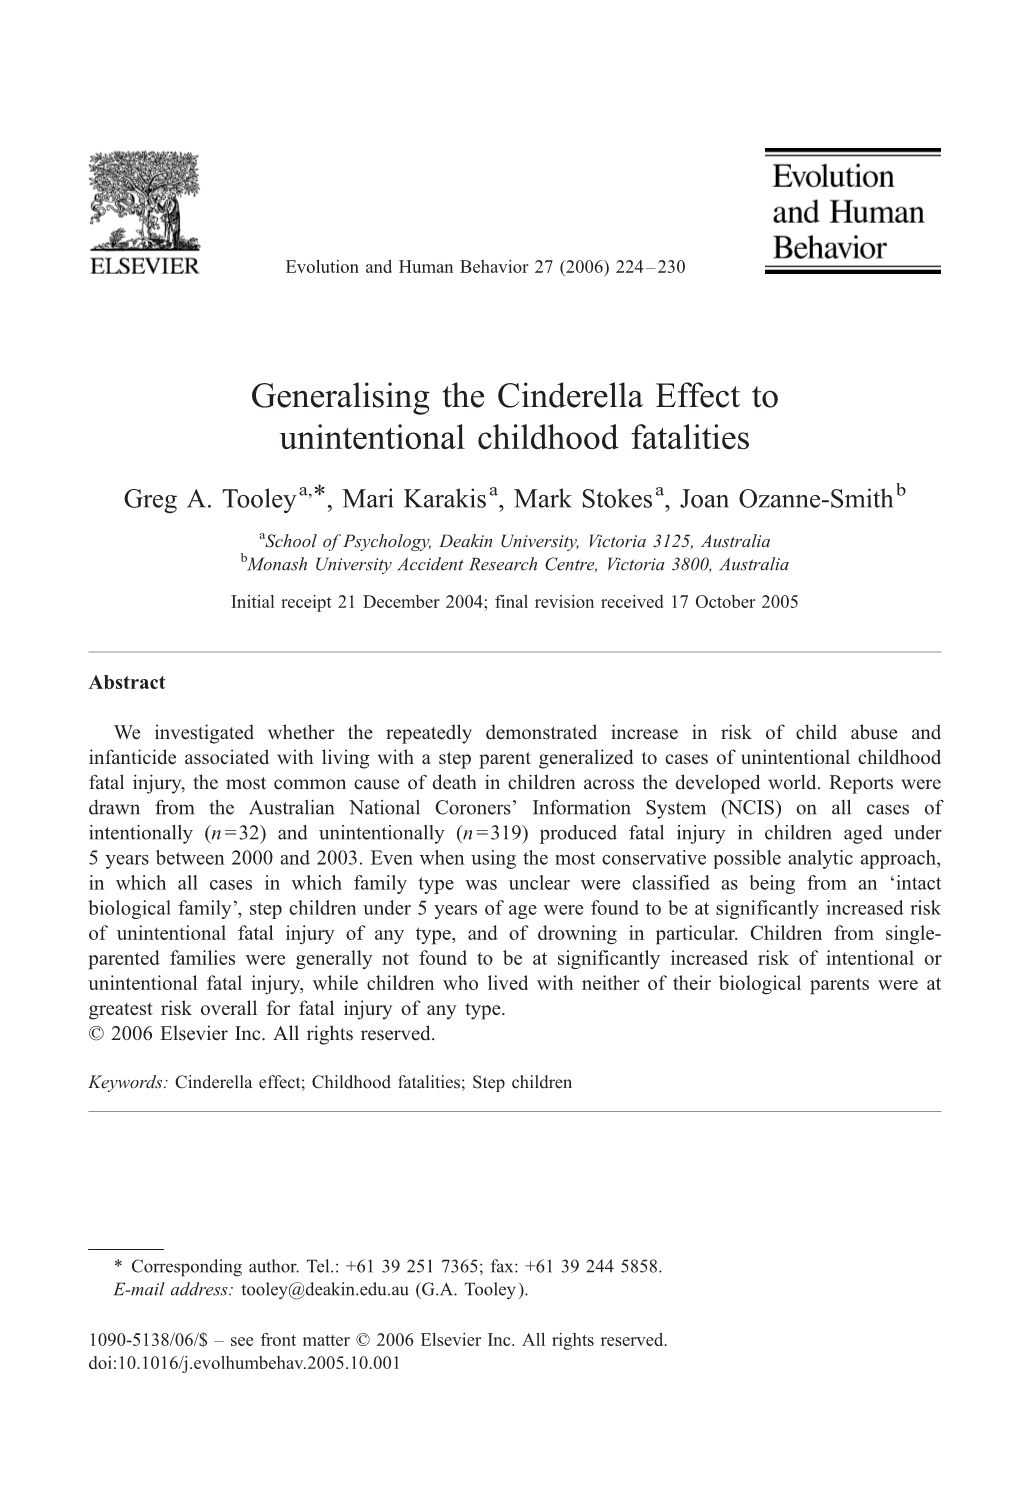 Generalising the Cinderella Effect to Unintentional Childhood Fatalities